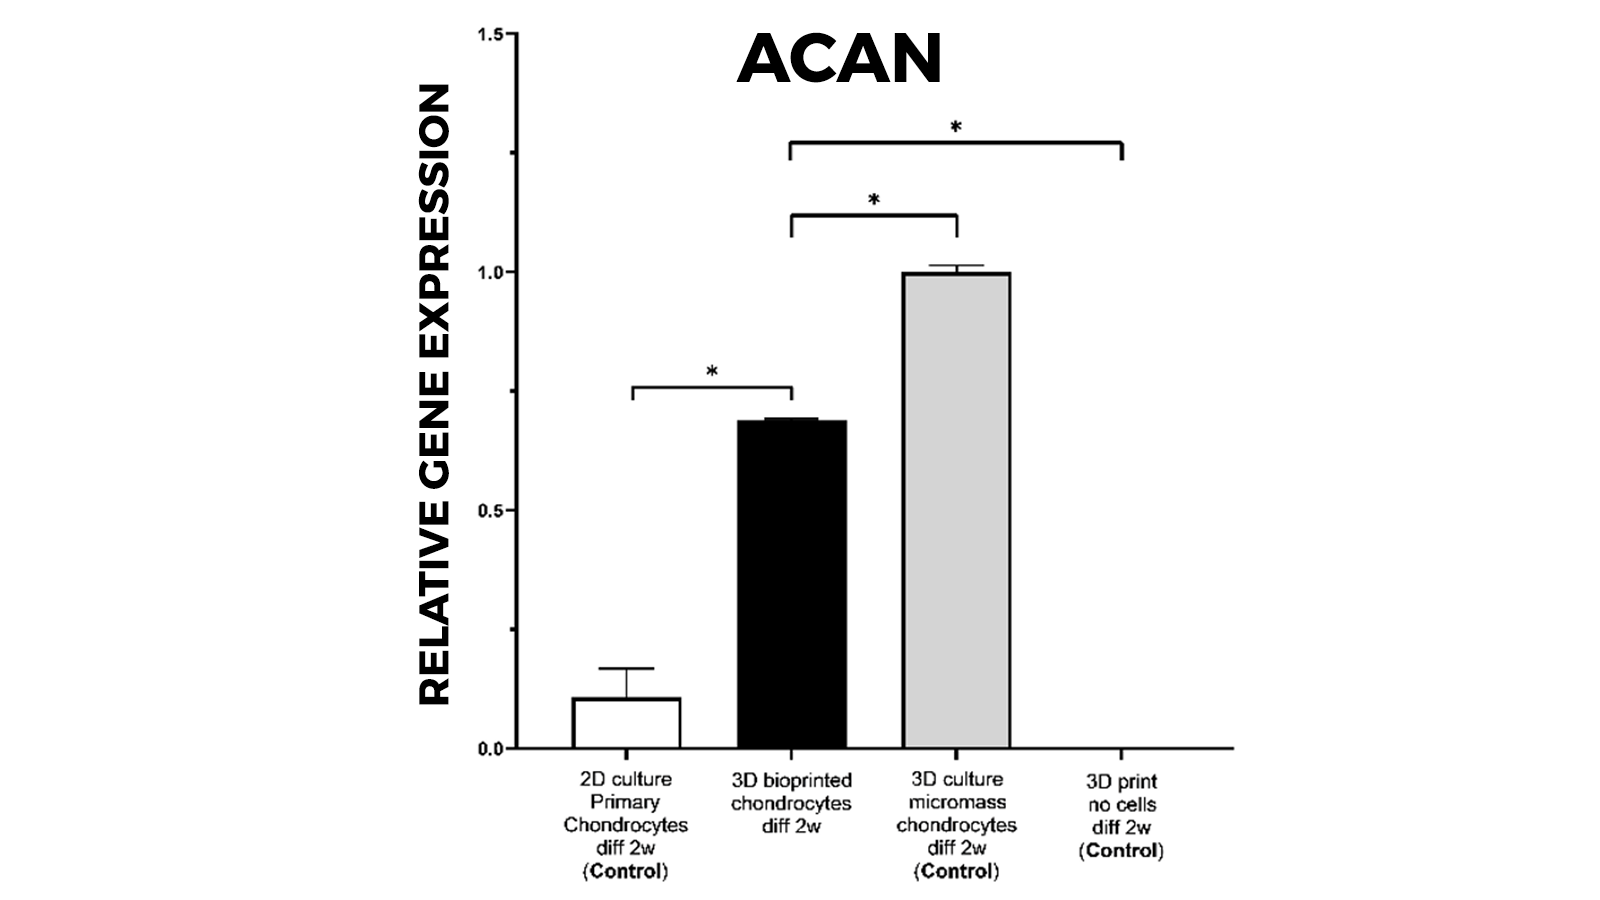 3D promoting differentiation stem cells towards cartilage increased cartilage specific aggrecan (ACAN) mRNA expression 3D milieu compare 2D (Gatenholm et al., 2020). cópia